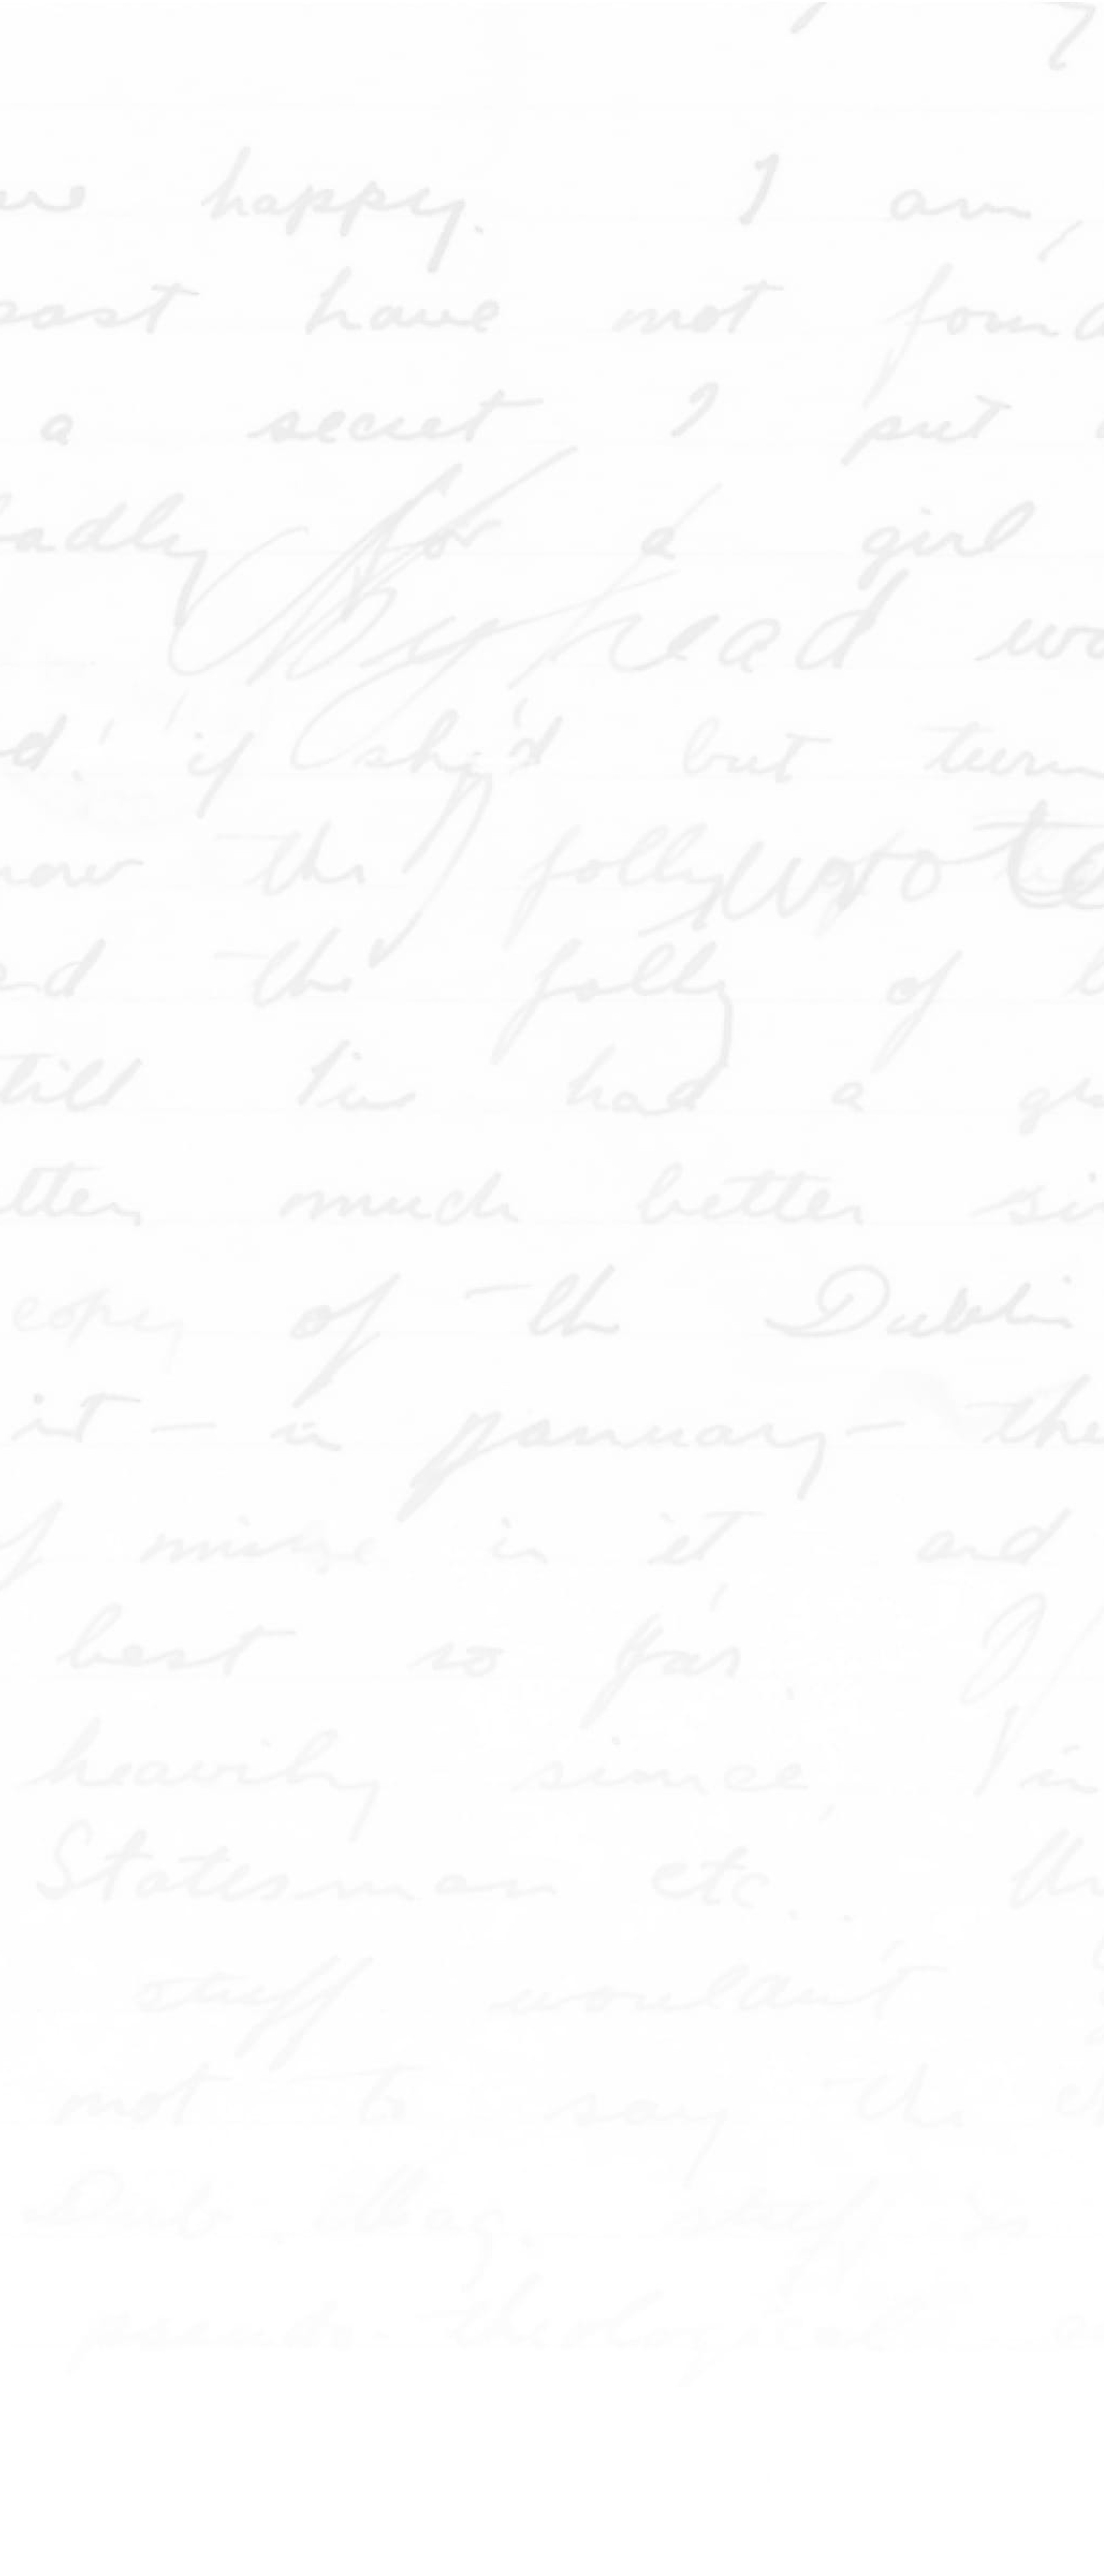 kavanagh-bg-handwritten_web.jpg